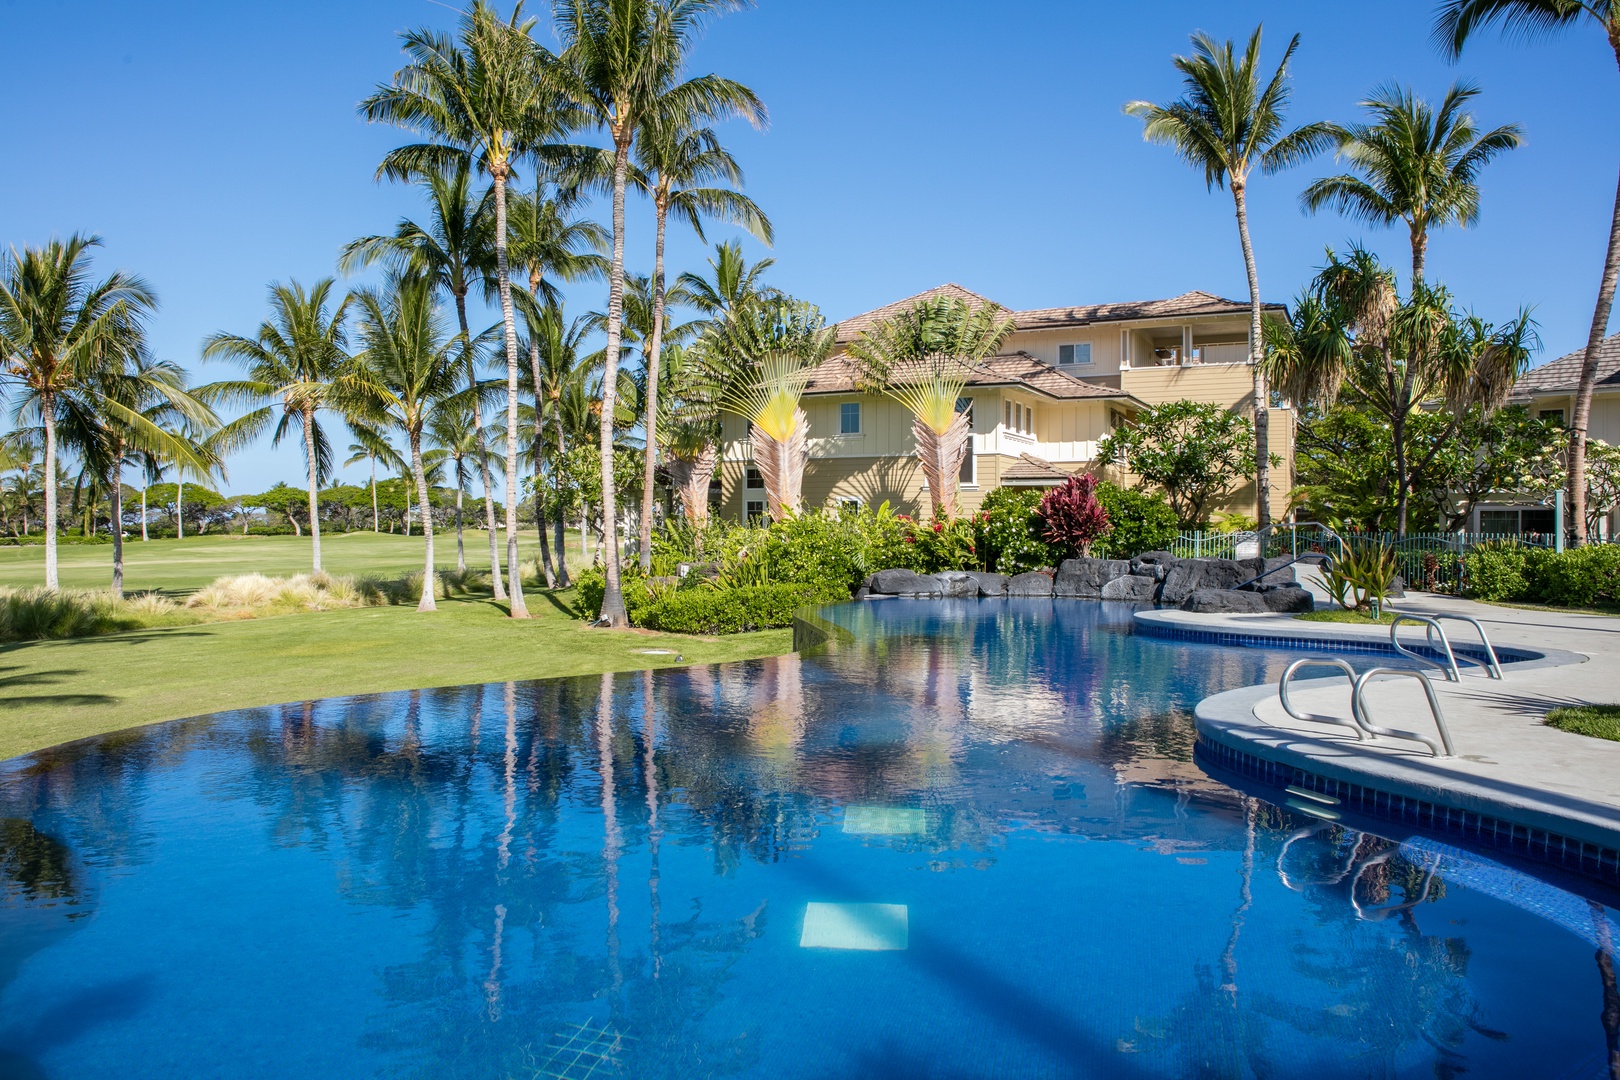 Waikoloa Vacation Rentals, Fairway Villas at Waikoloa Beach Resort E34 - Plenty of room to swim and cool off in the resort pool